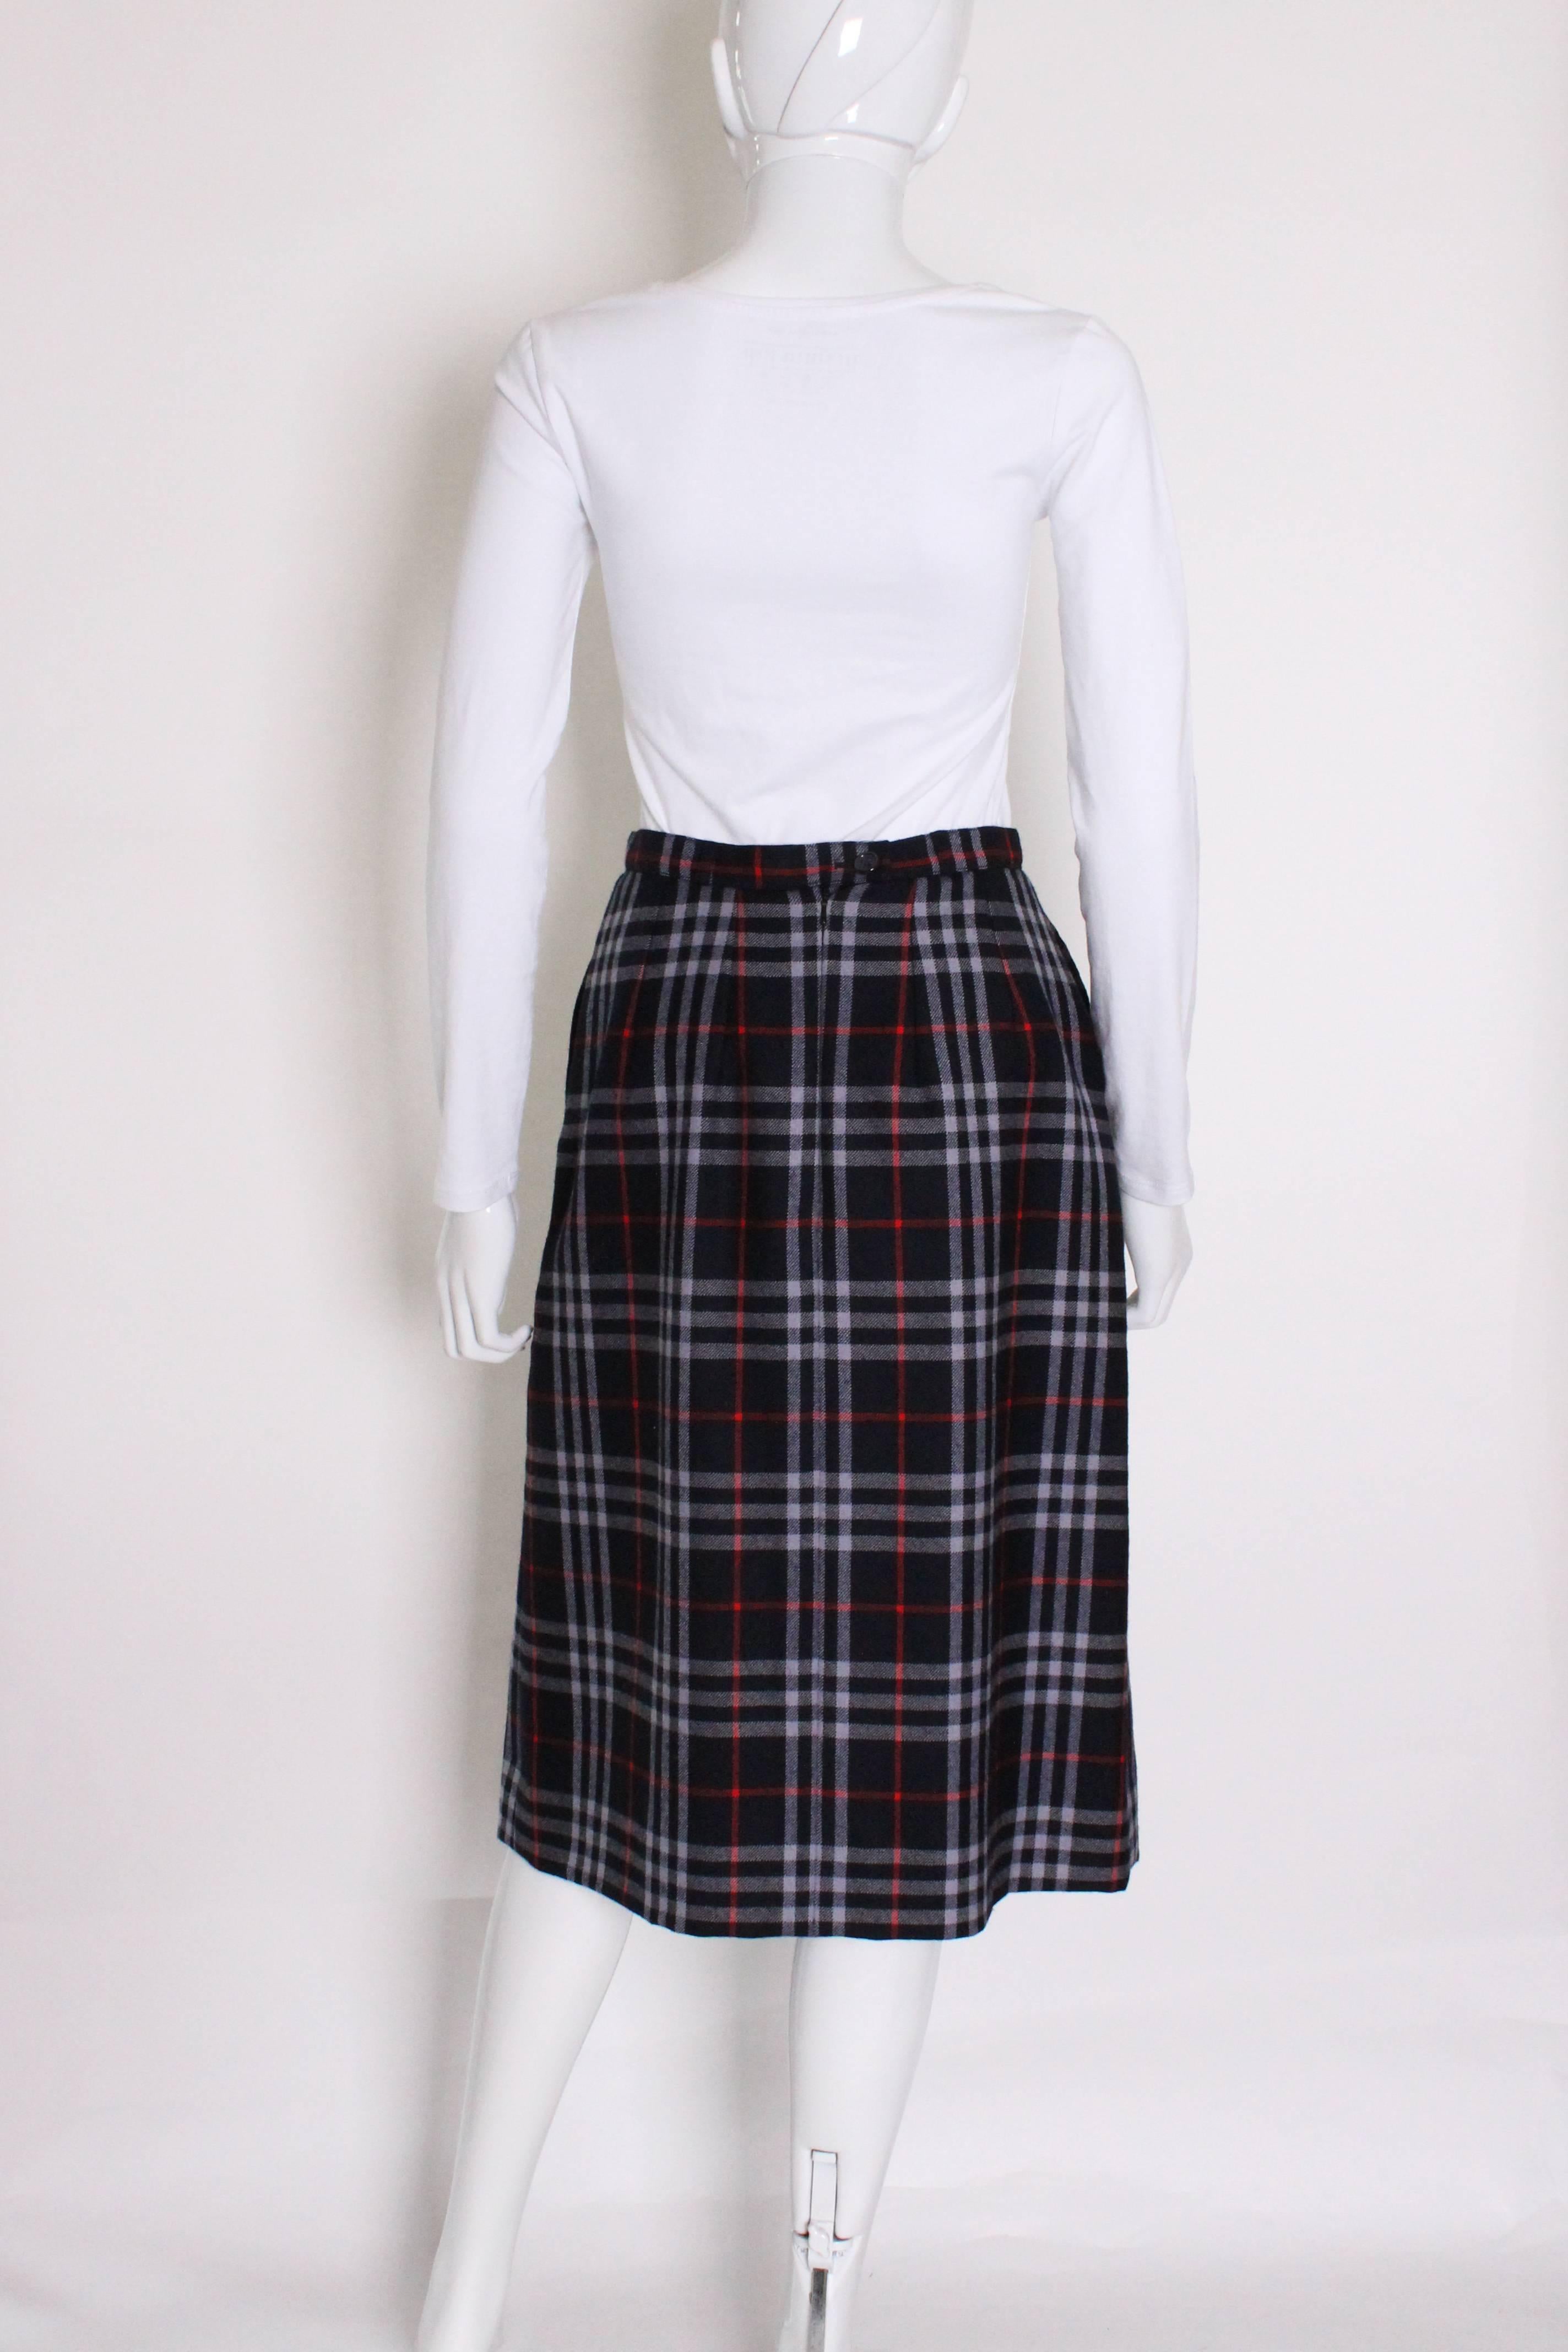 burberry skirt vintage